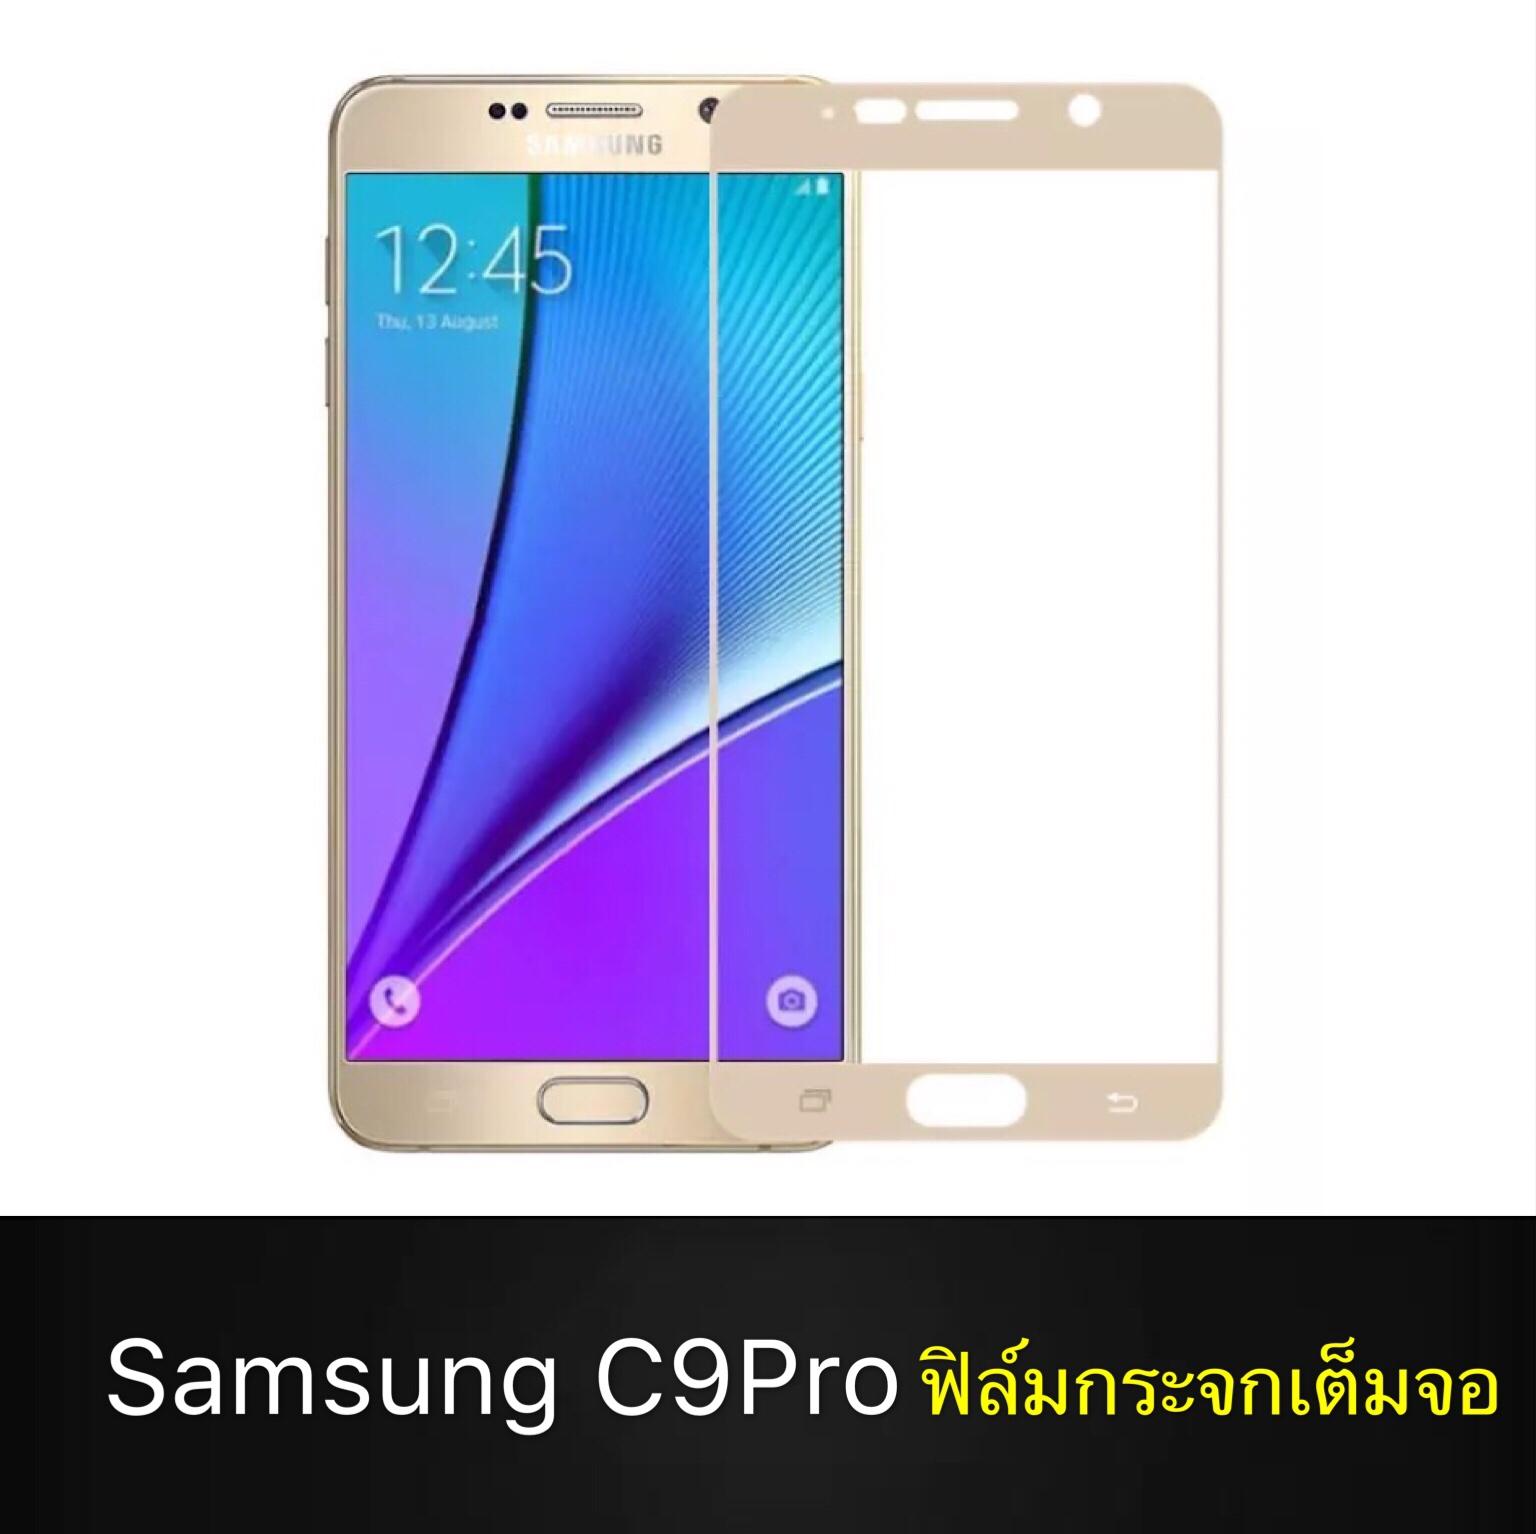 Samsung Galaxy C9 Pro - Bilderstrecken - WinFuture.de